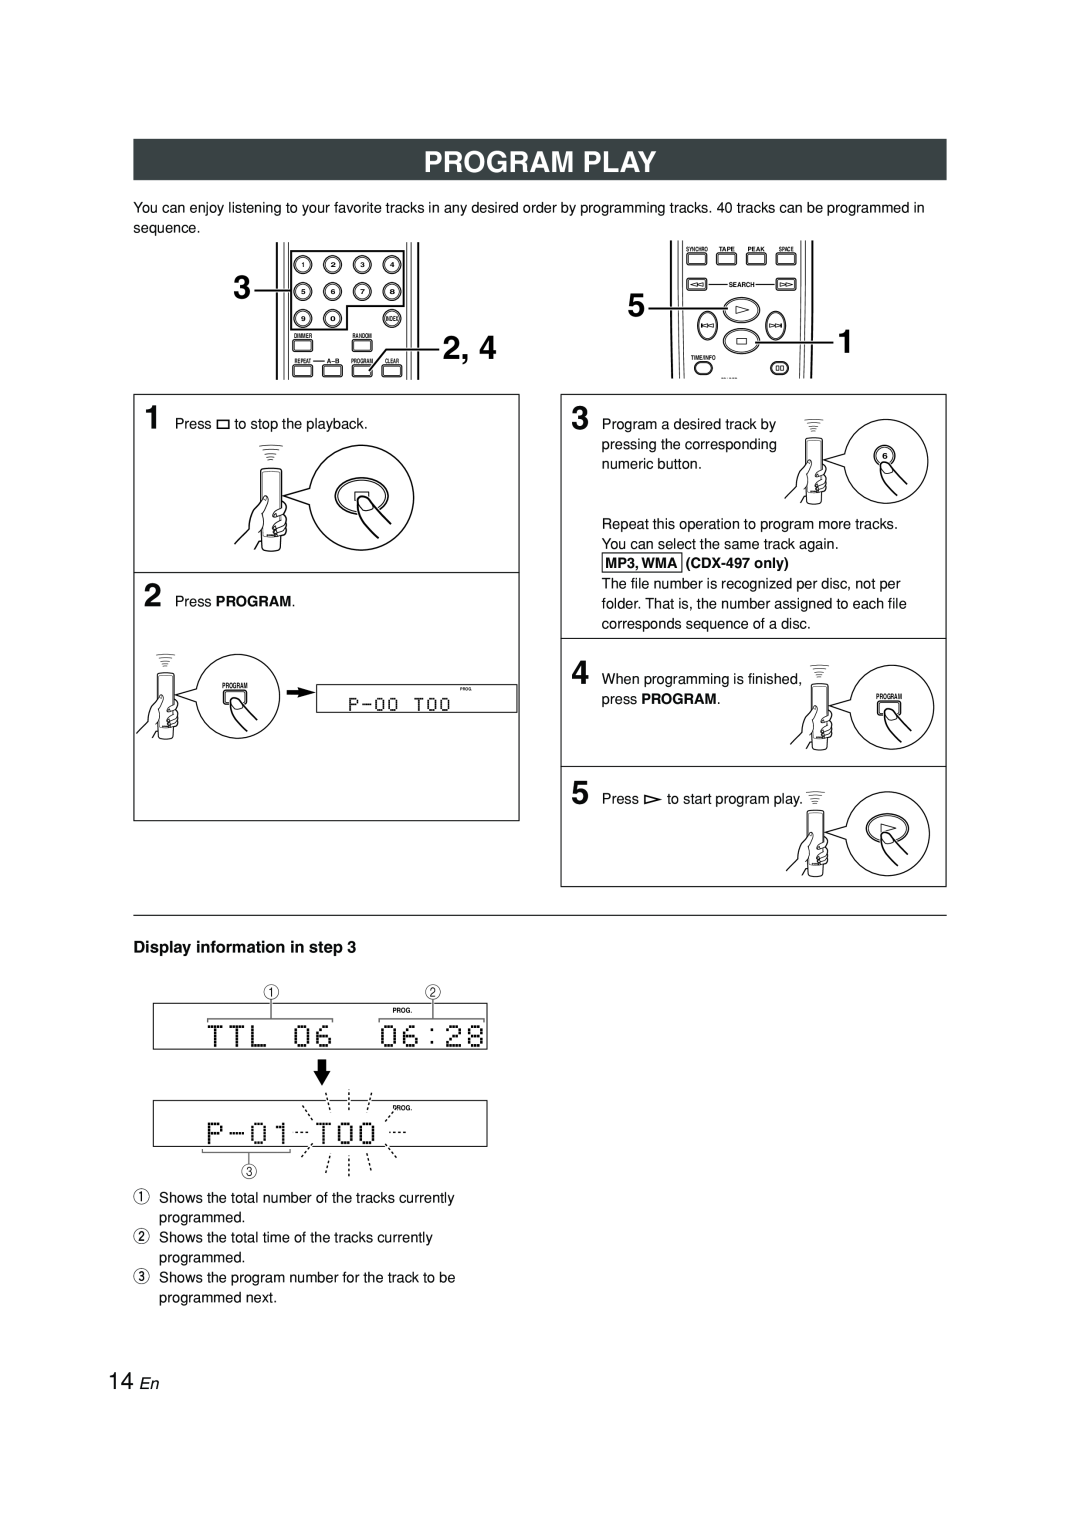 Yamaha CDX-397, CDX-97 owner manual Program Play, 14 En, Display information in step 